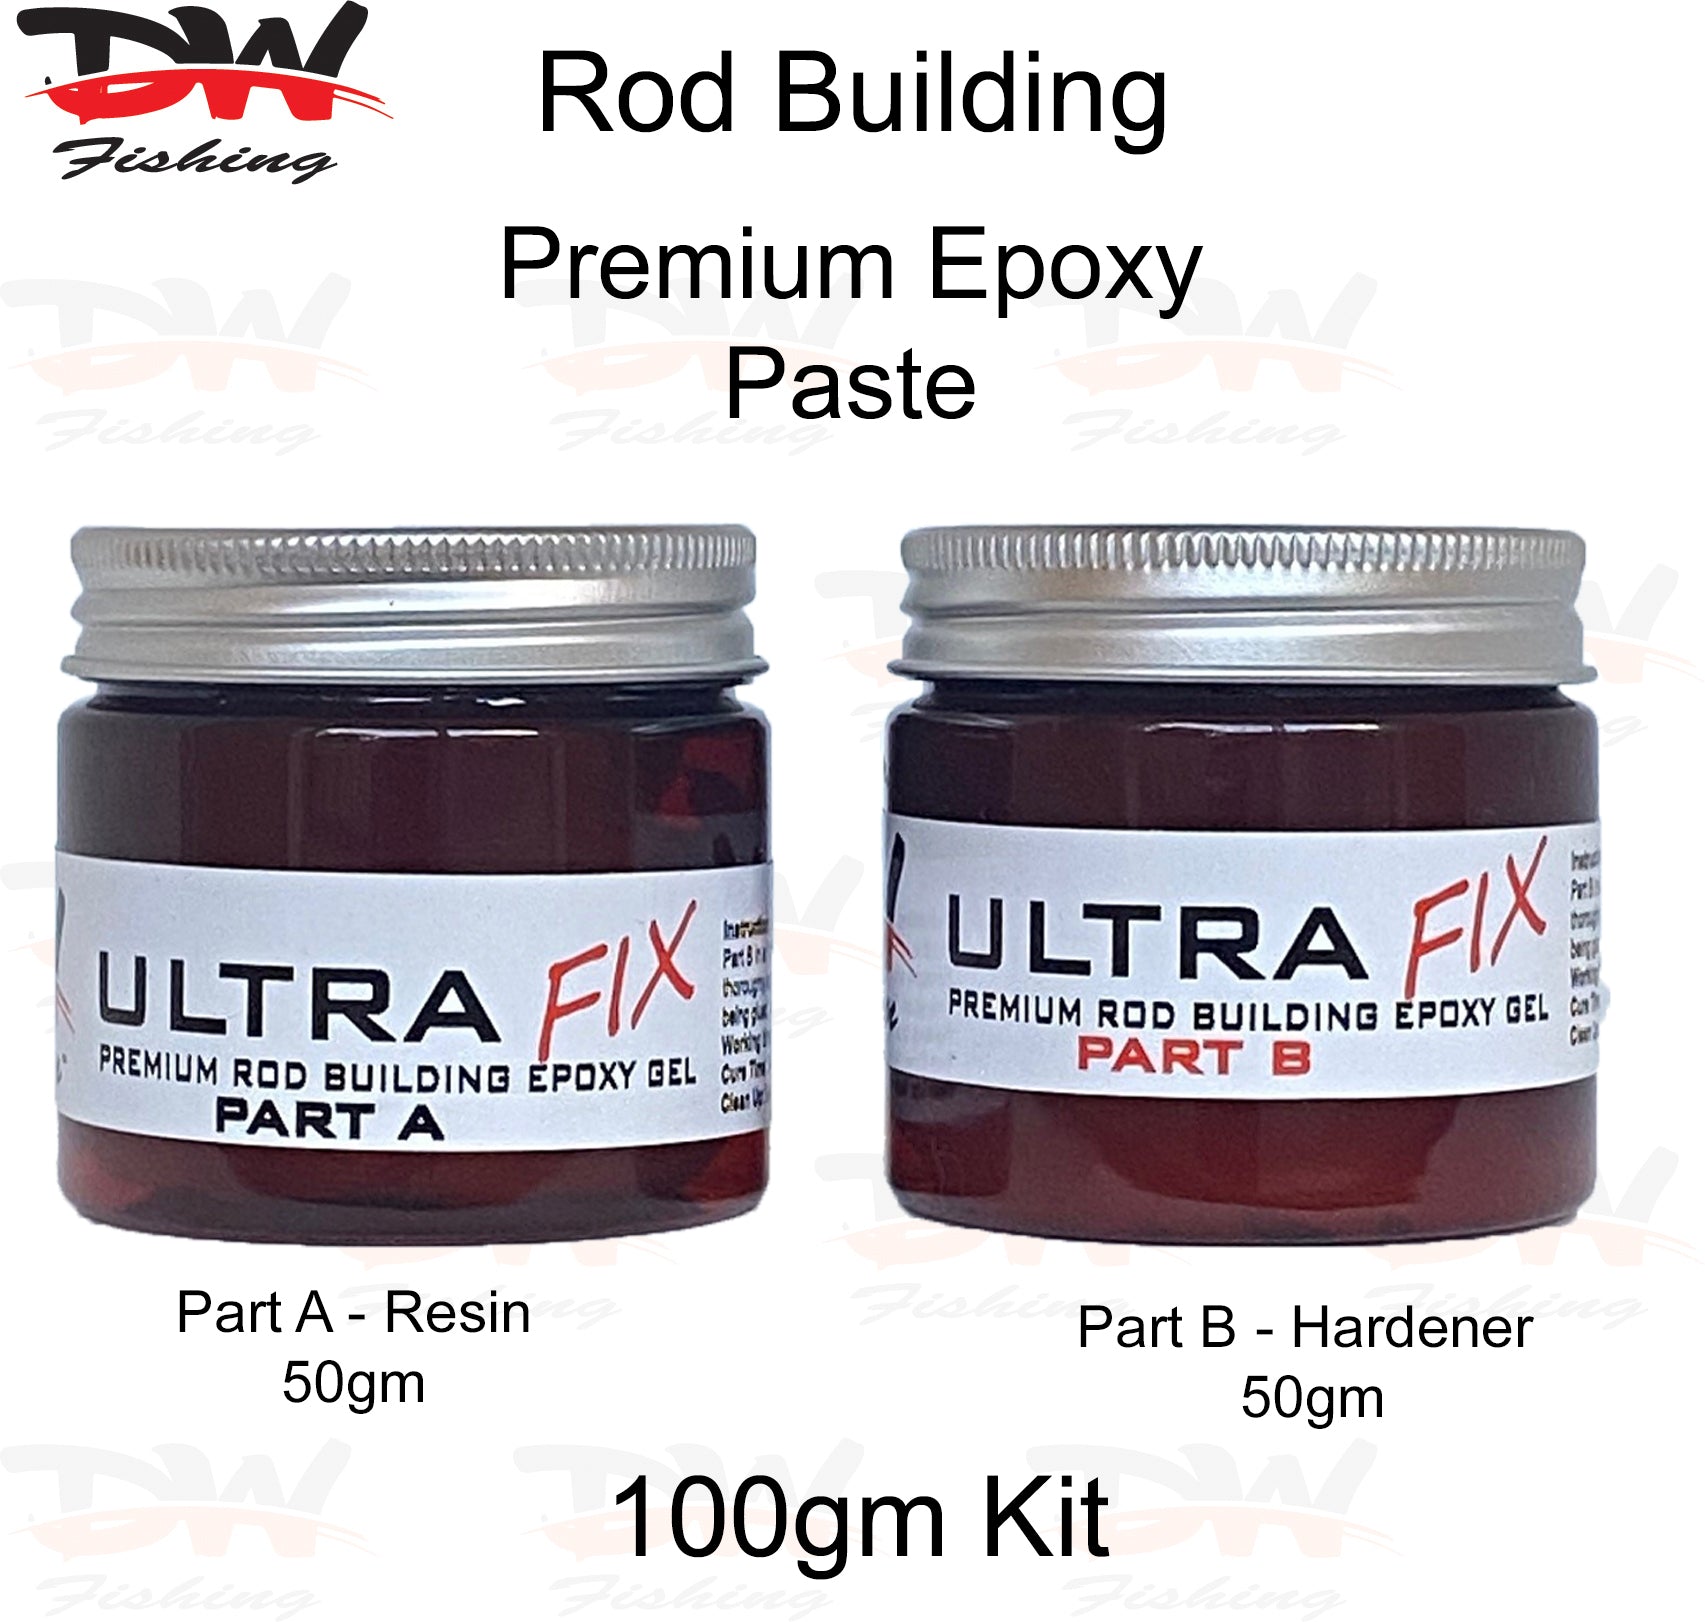 Ultra Fix premium rod building epoxy paste gel 100gm kit 2 part epoxy paste for fishing rod building